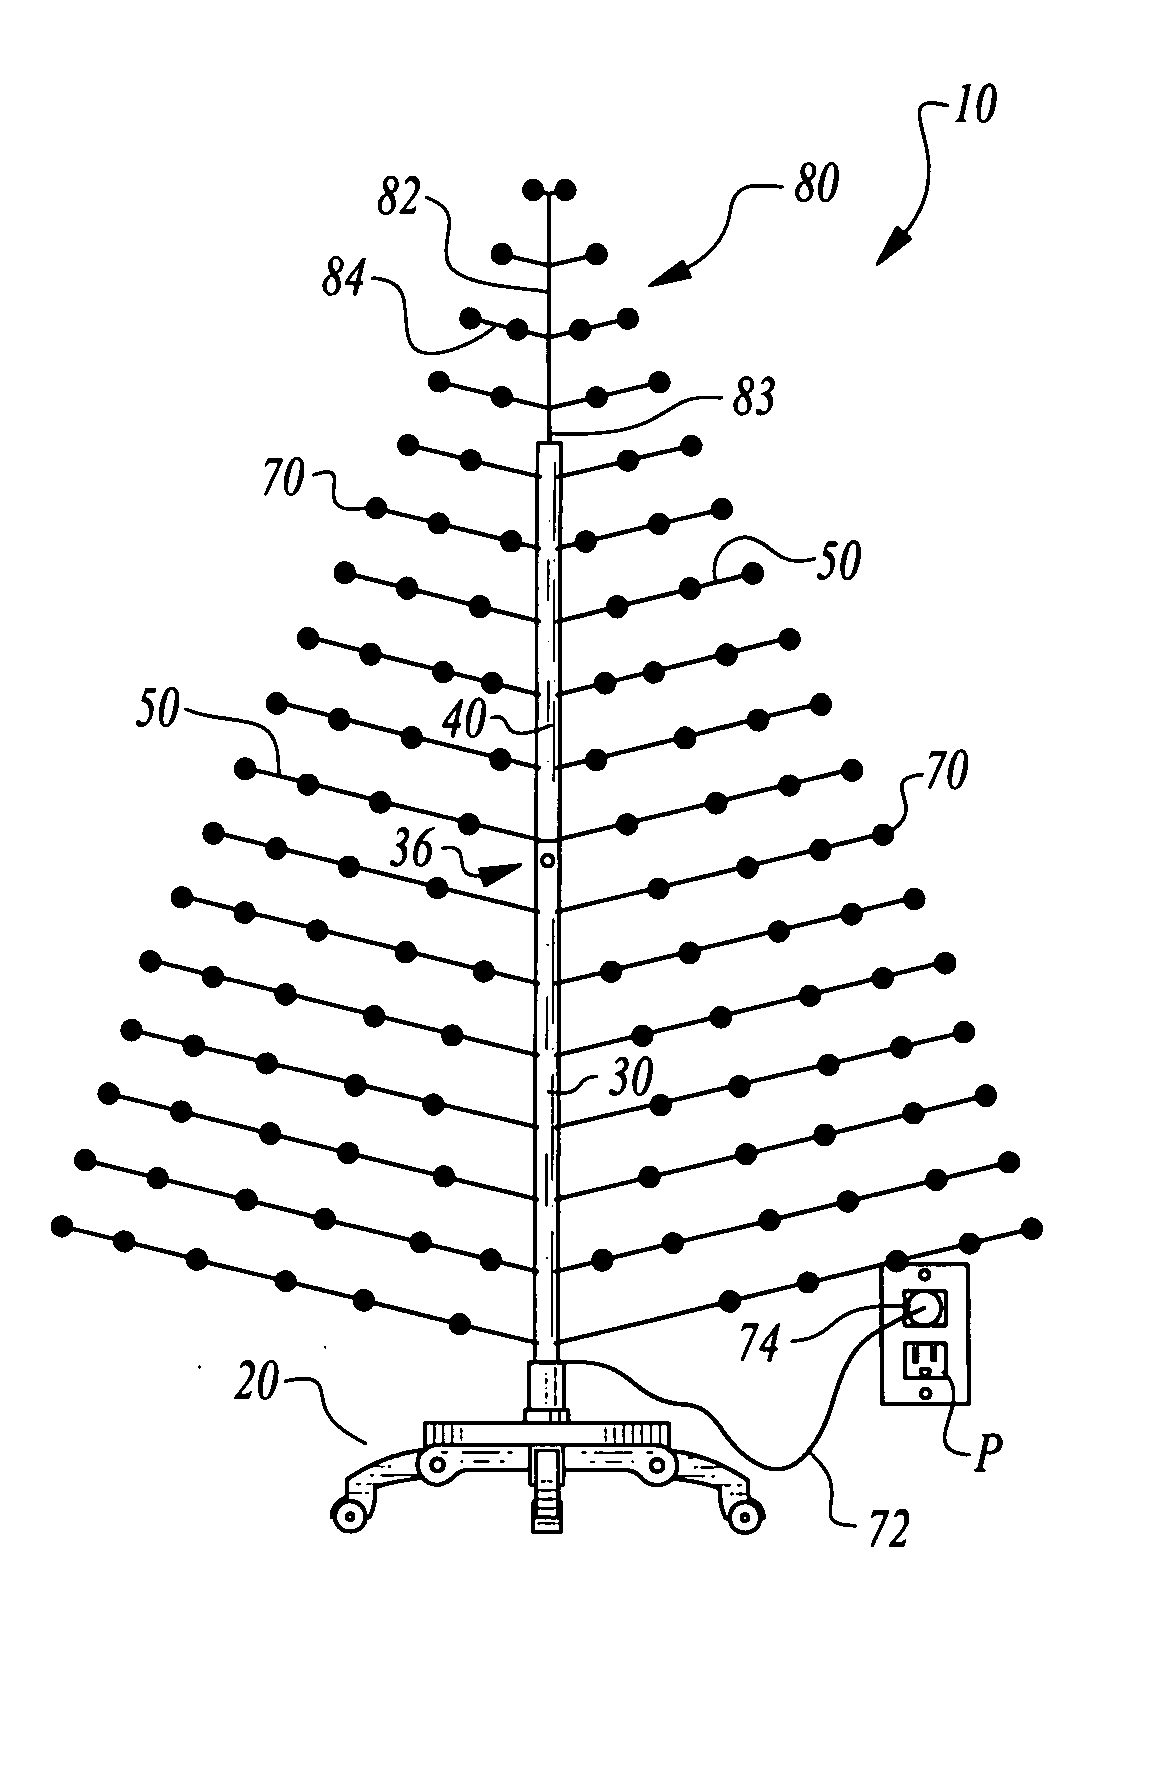 Invertible Christmas tree